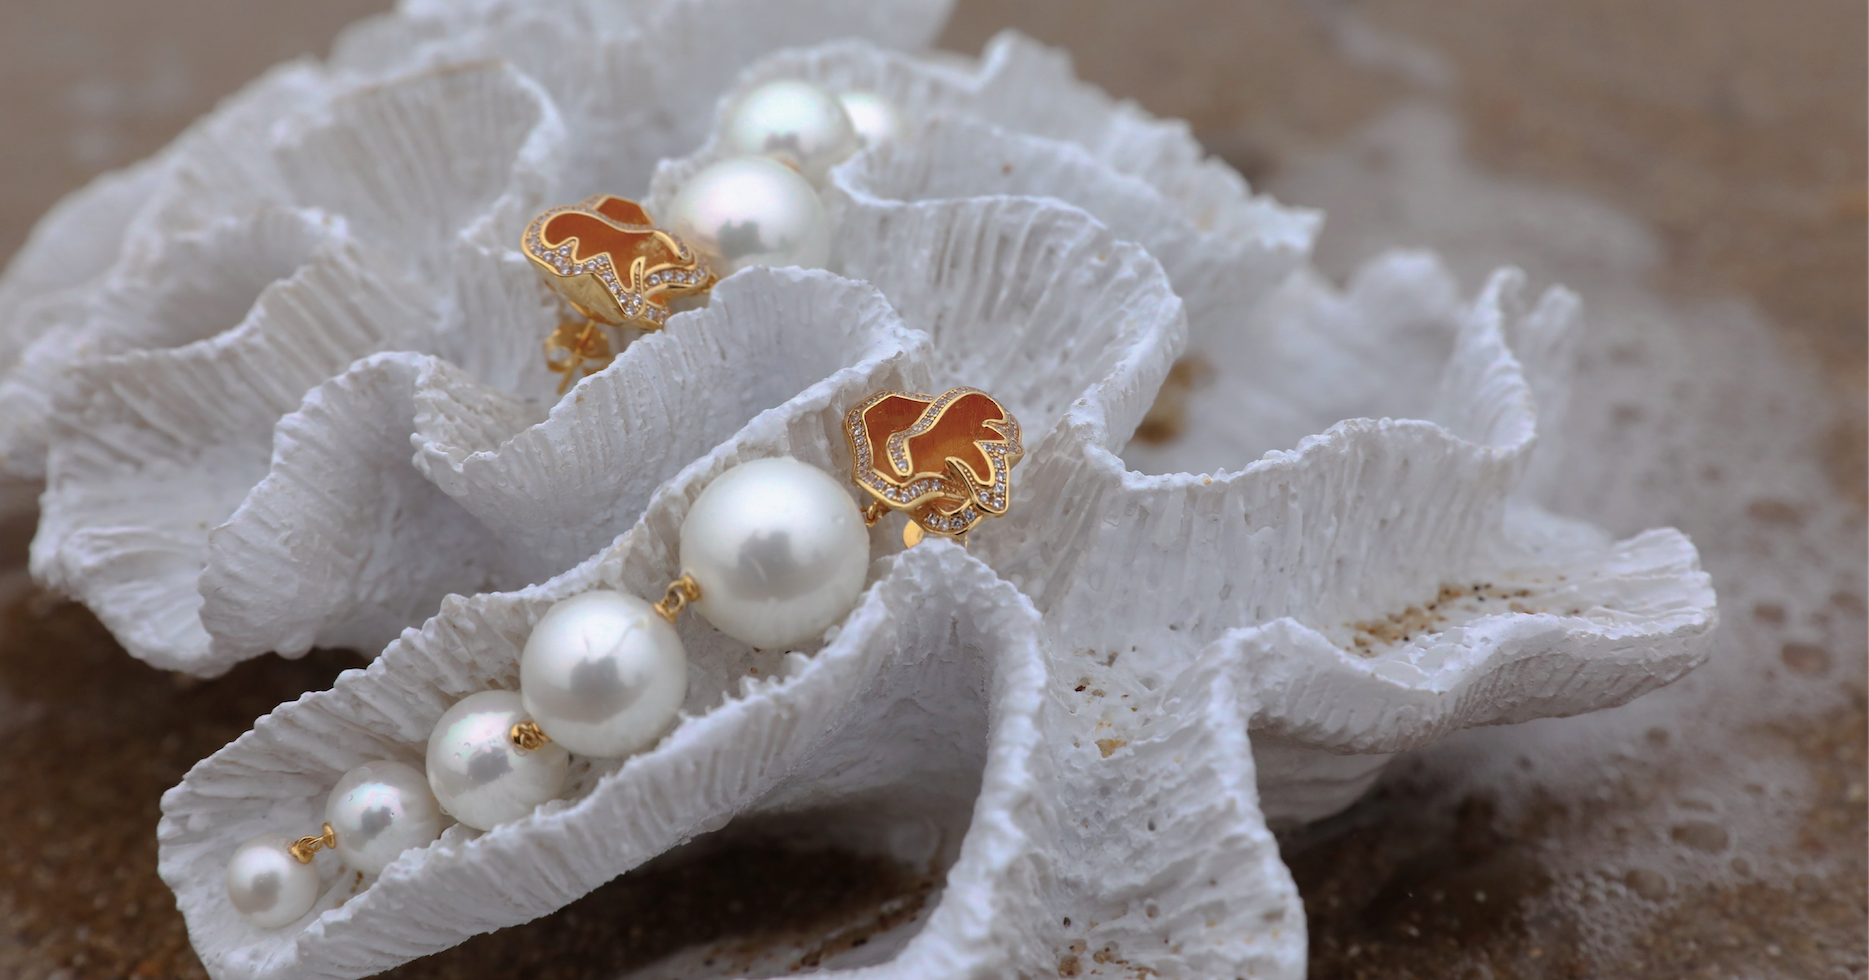 Pair of bespoke pearl bridal earrings by Georgia Wang